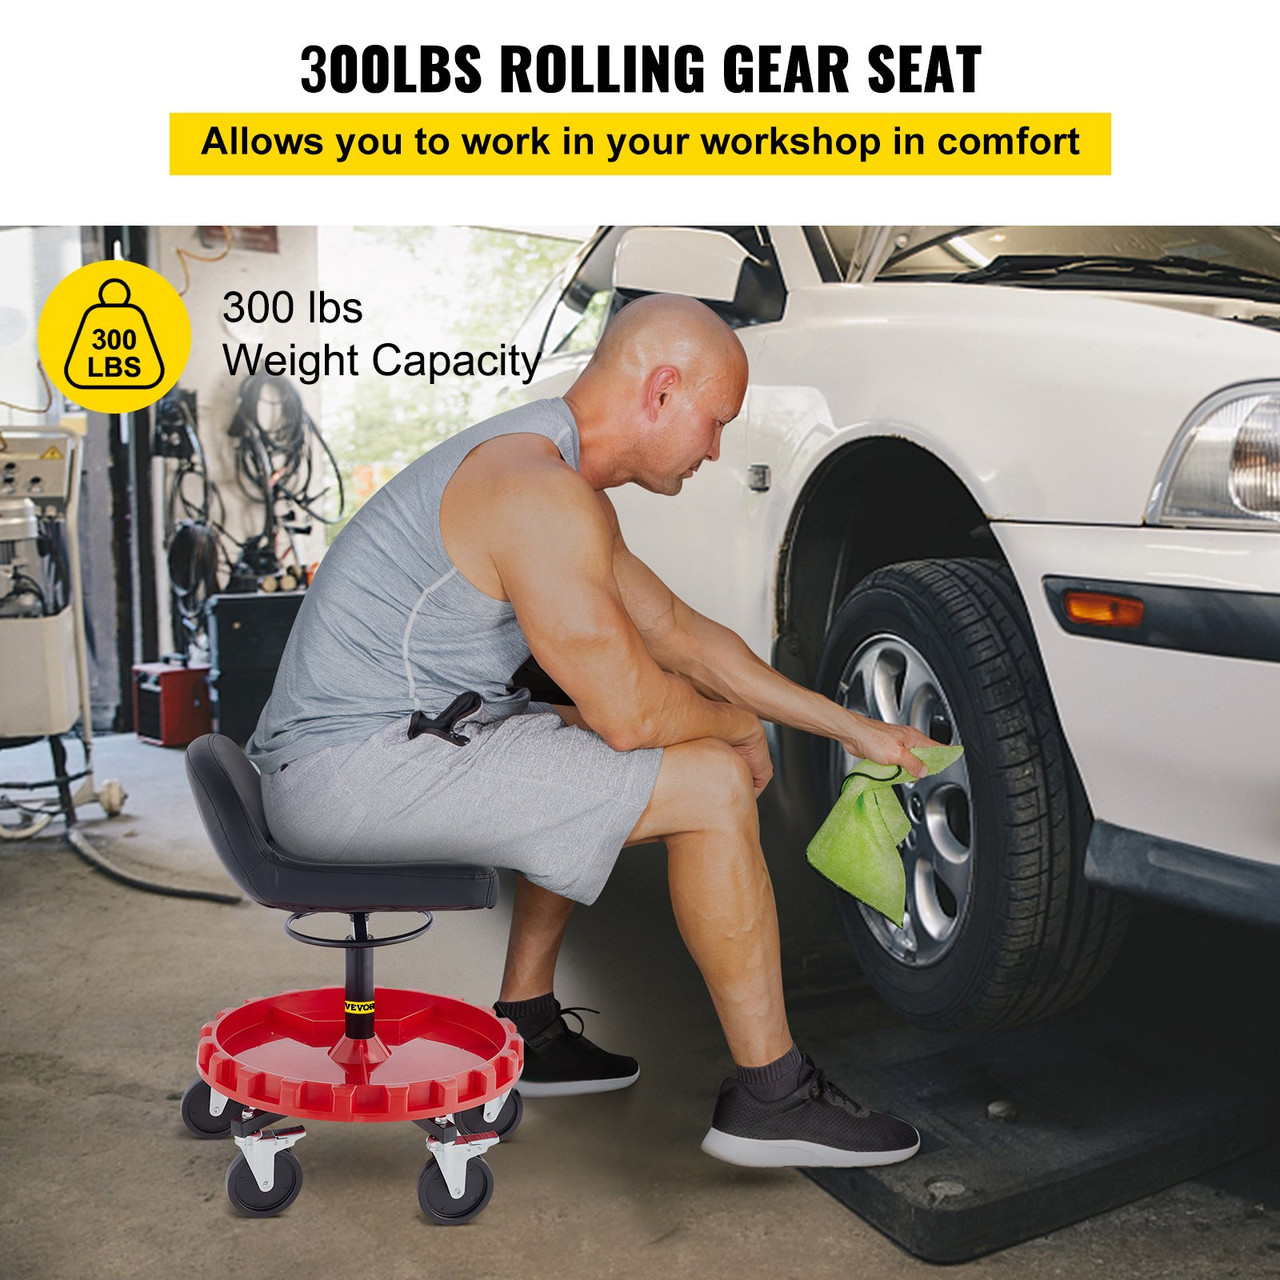 Mechanics Swivel Seat 300 LBS Rolling Work Stool Height Adjustable Seat